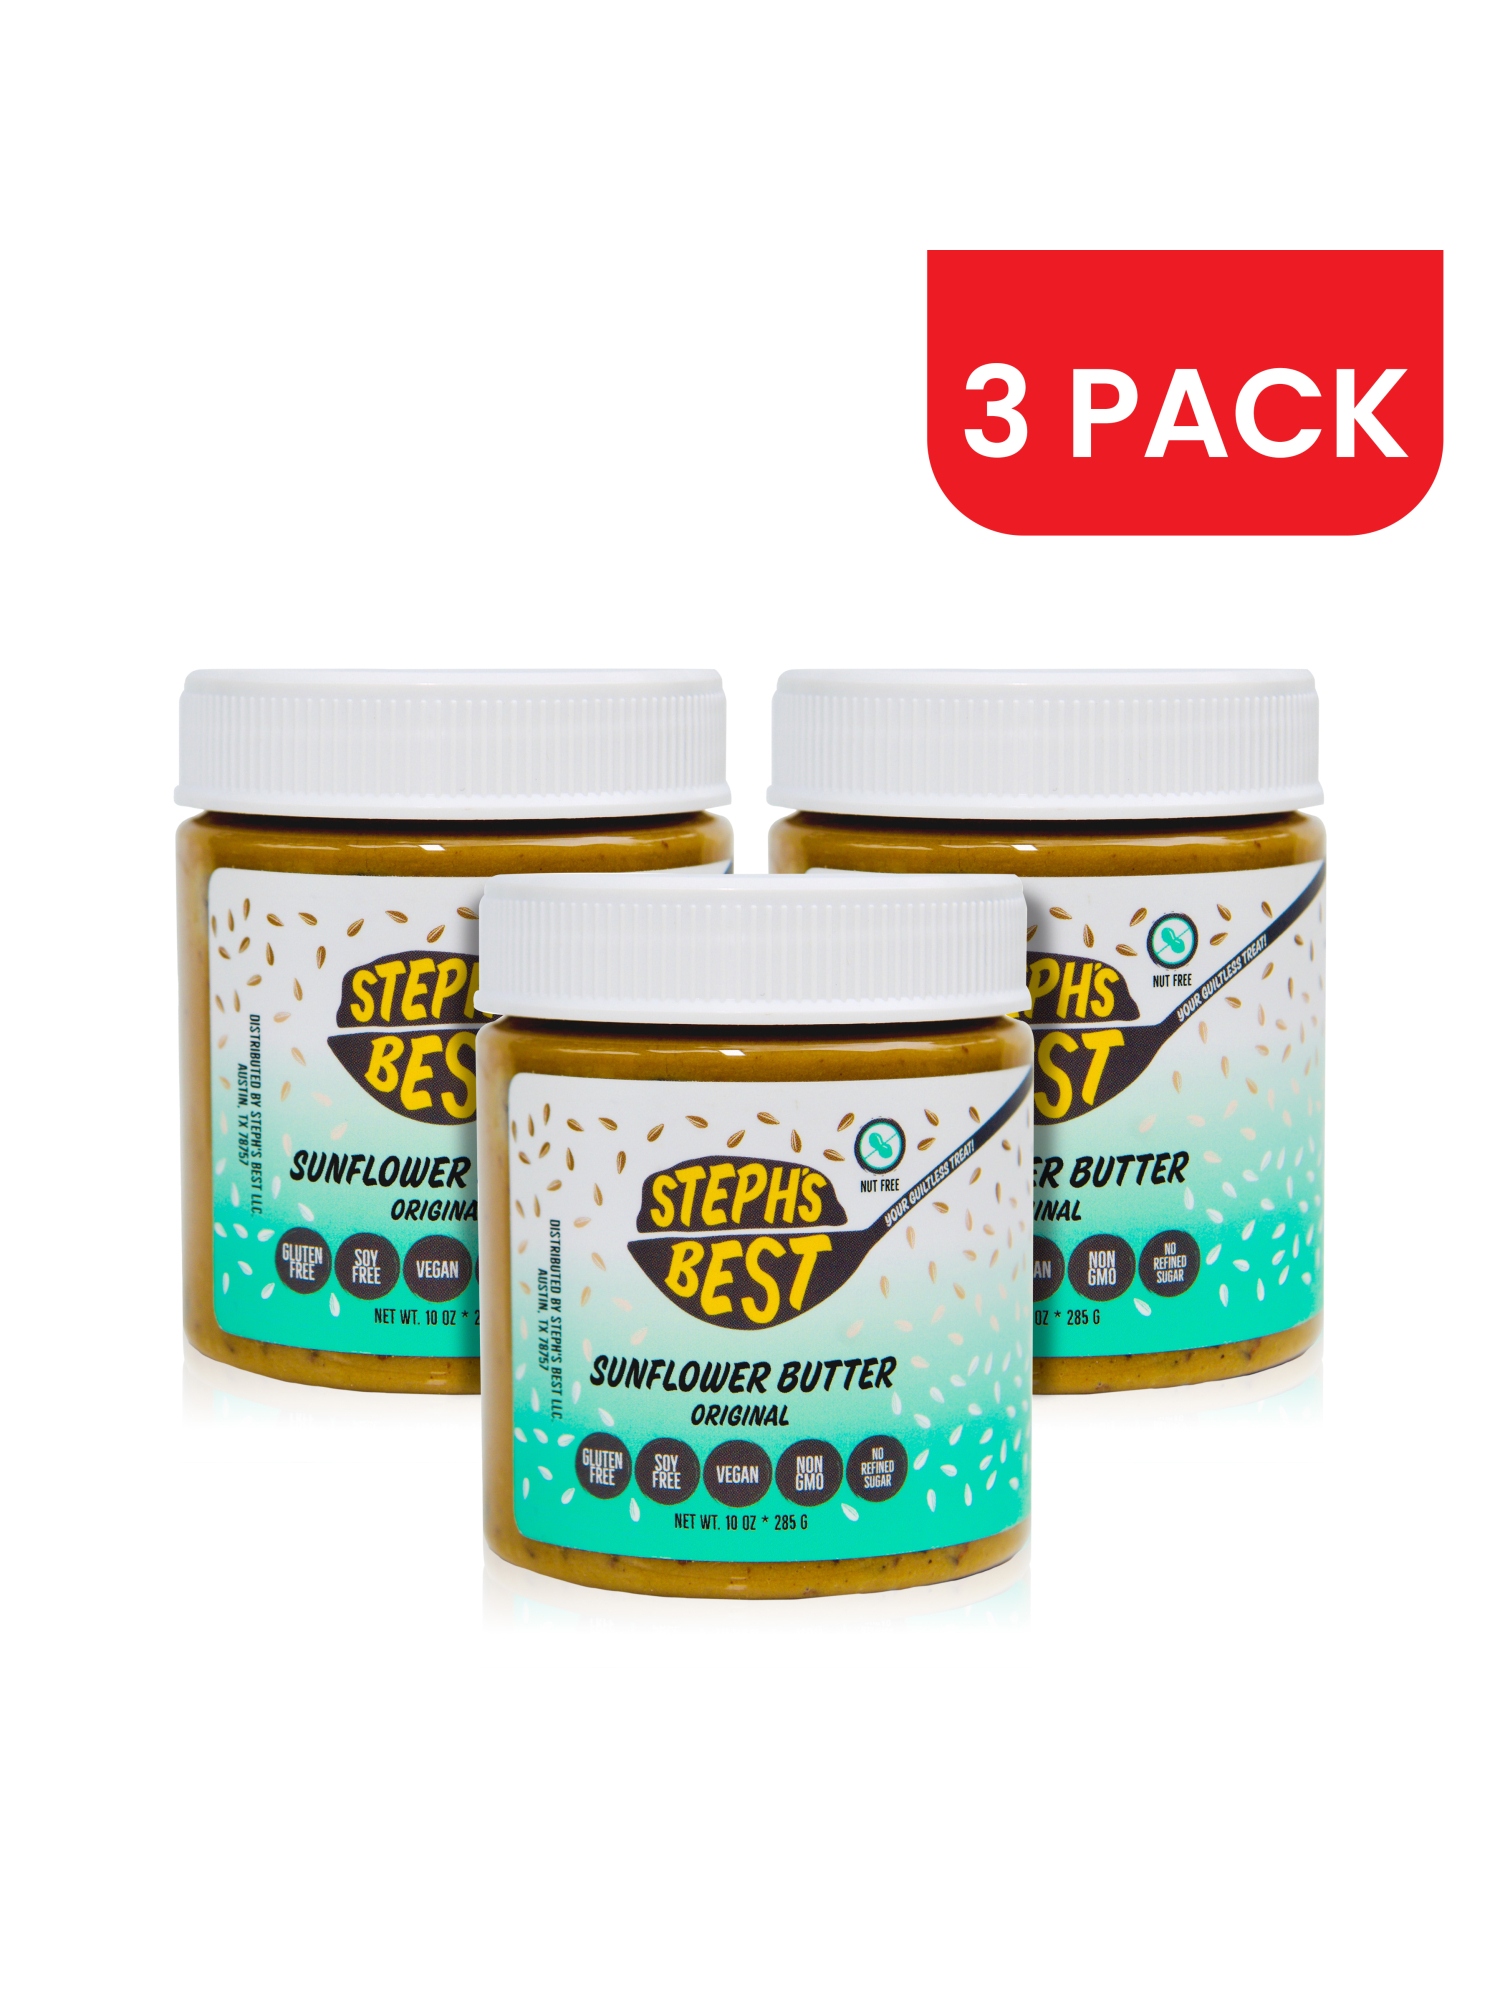 Steph's Best Steph’s Best Vegan Sunflower Seed Butter - Gluten-Free, Nut-Free, Soy-Free Spread, 3 Pack